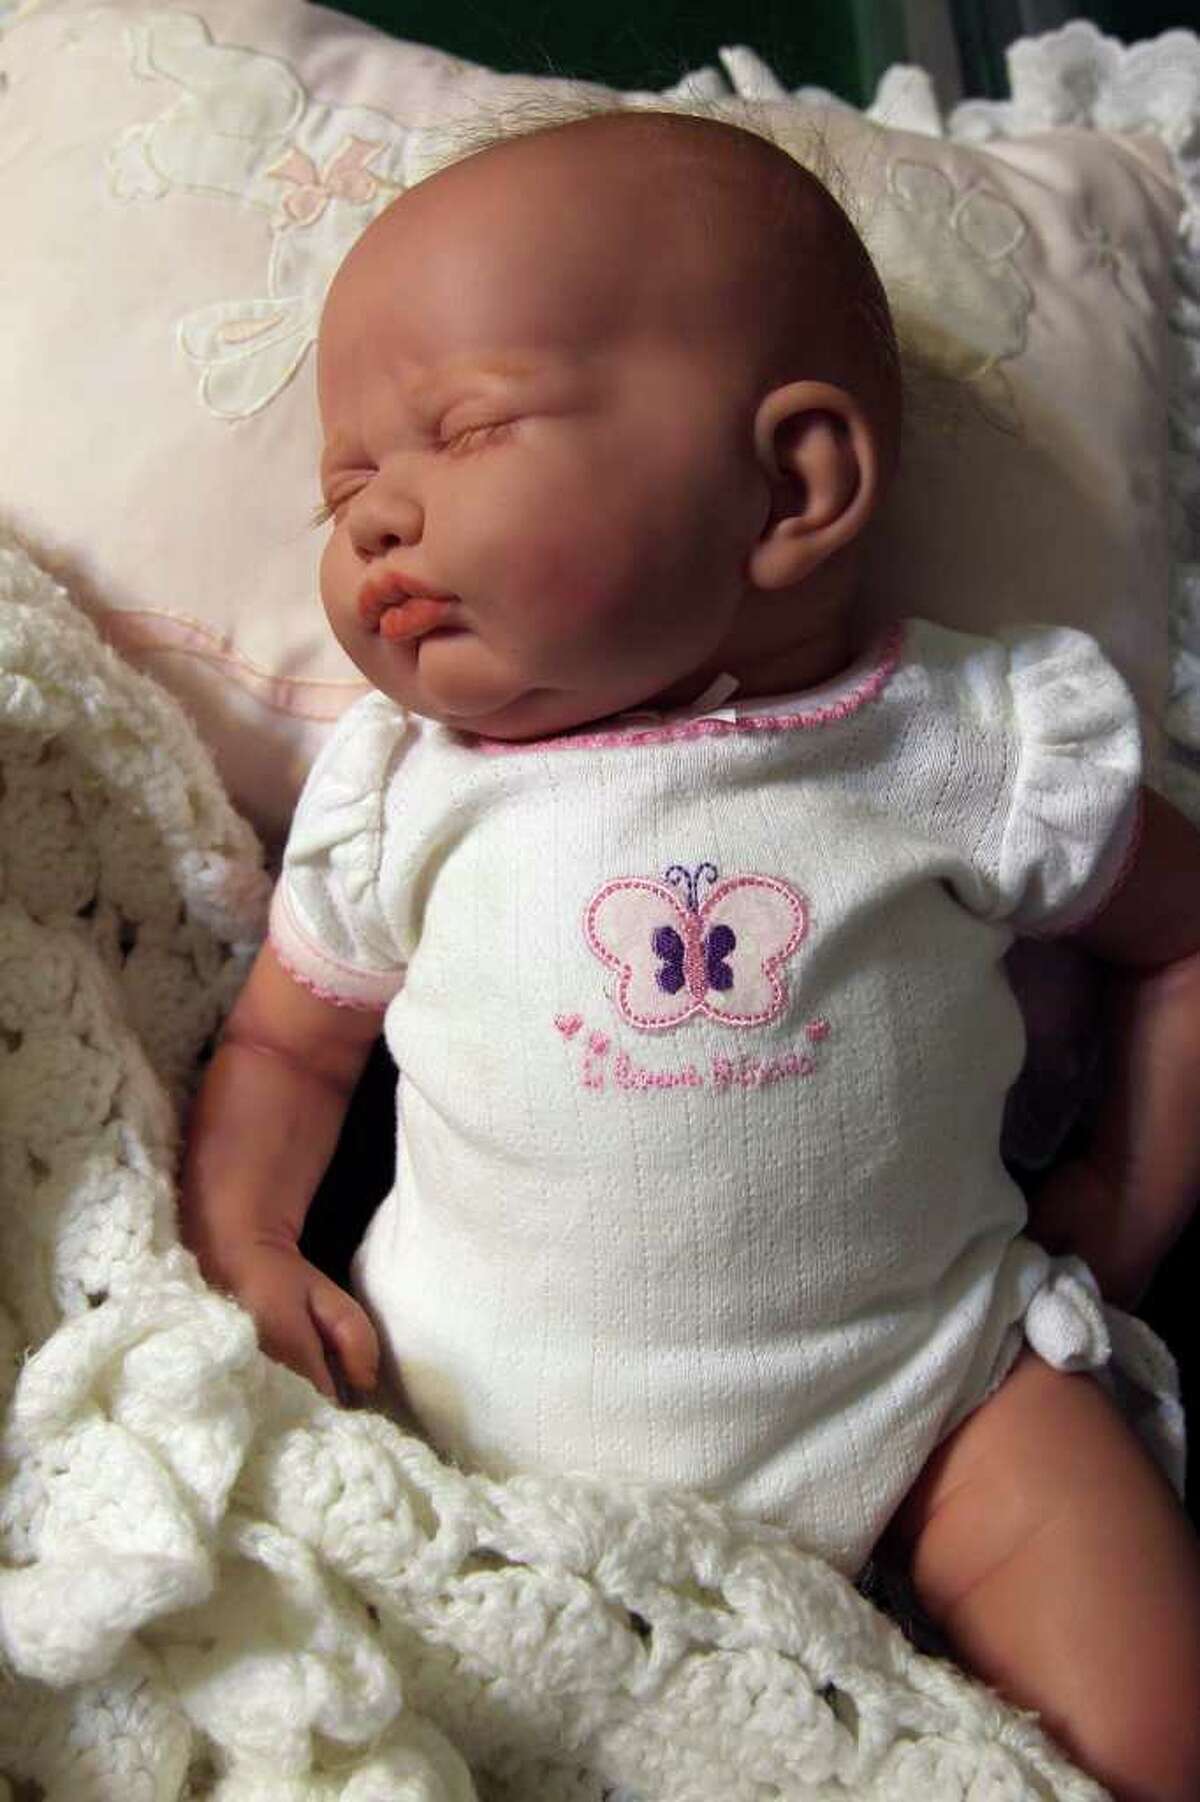 A “reborn” doll transformed by Tanya Sada looks like a real baby.